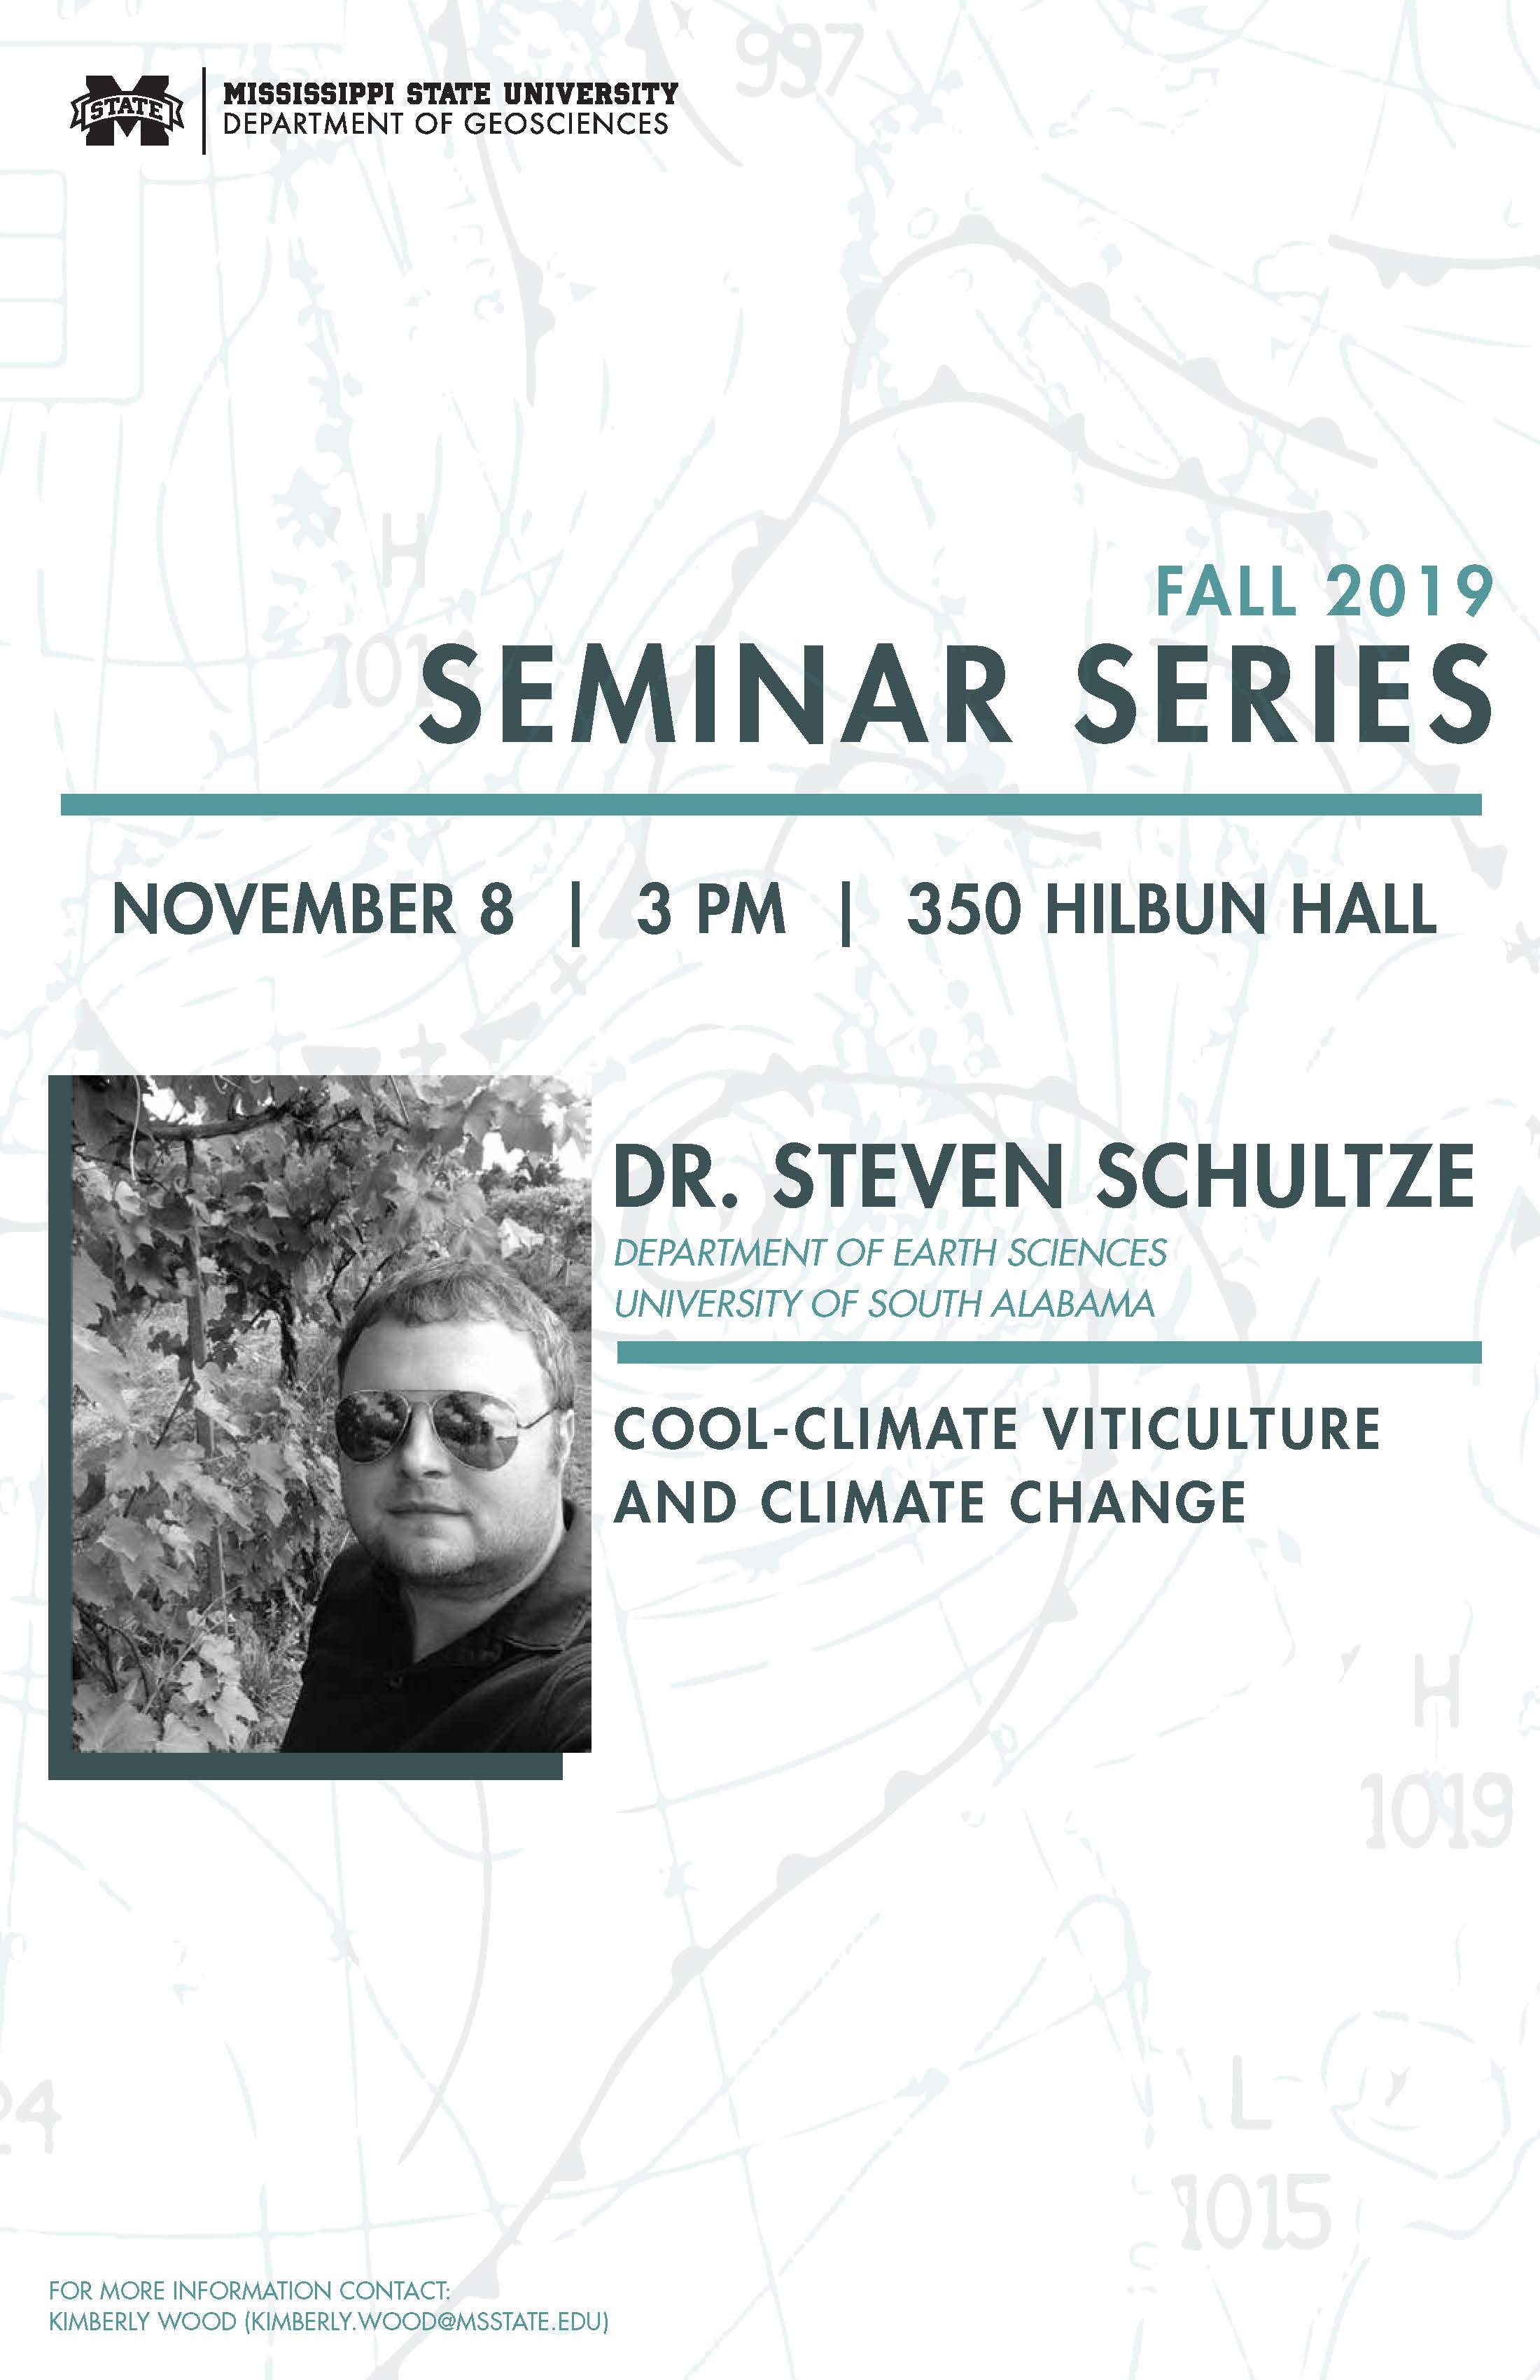 Dr. Steven Schultze seminar poster